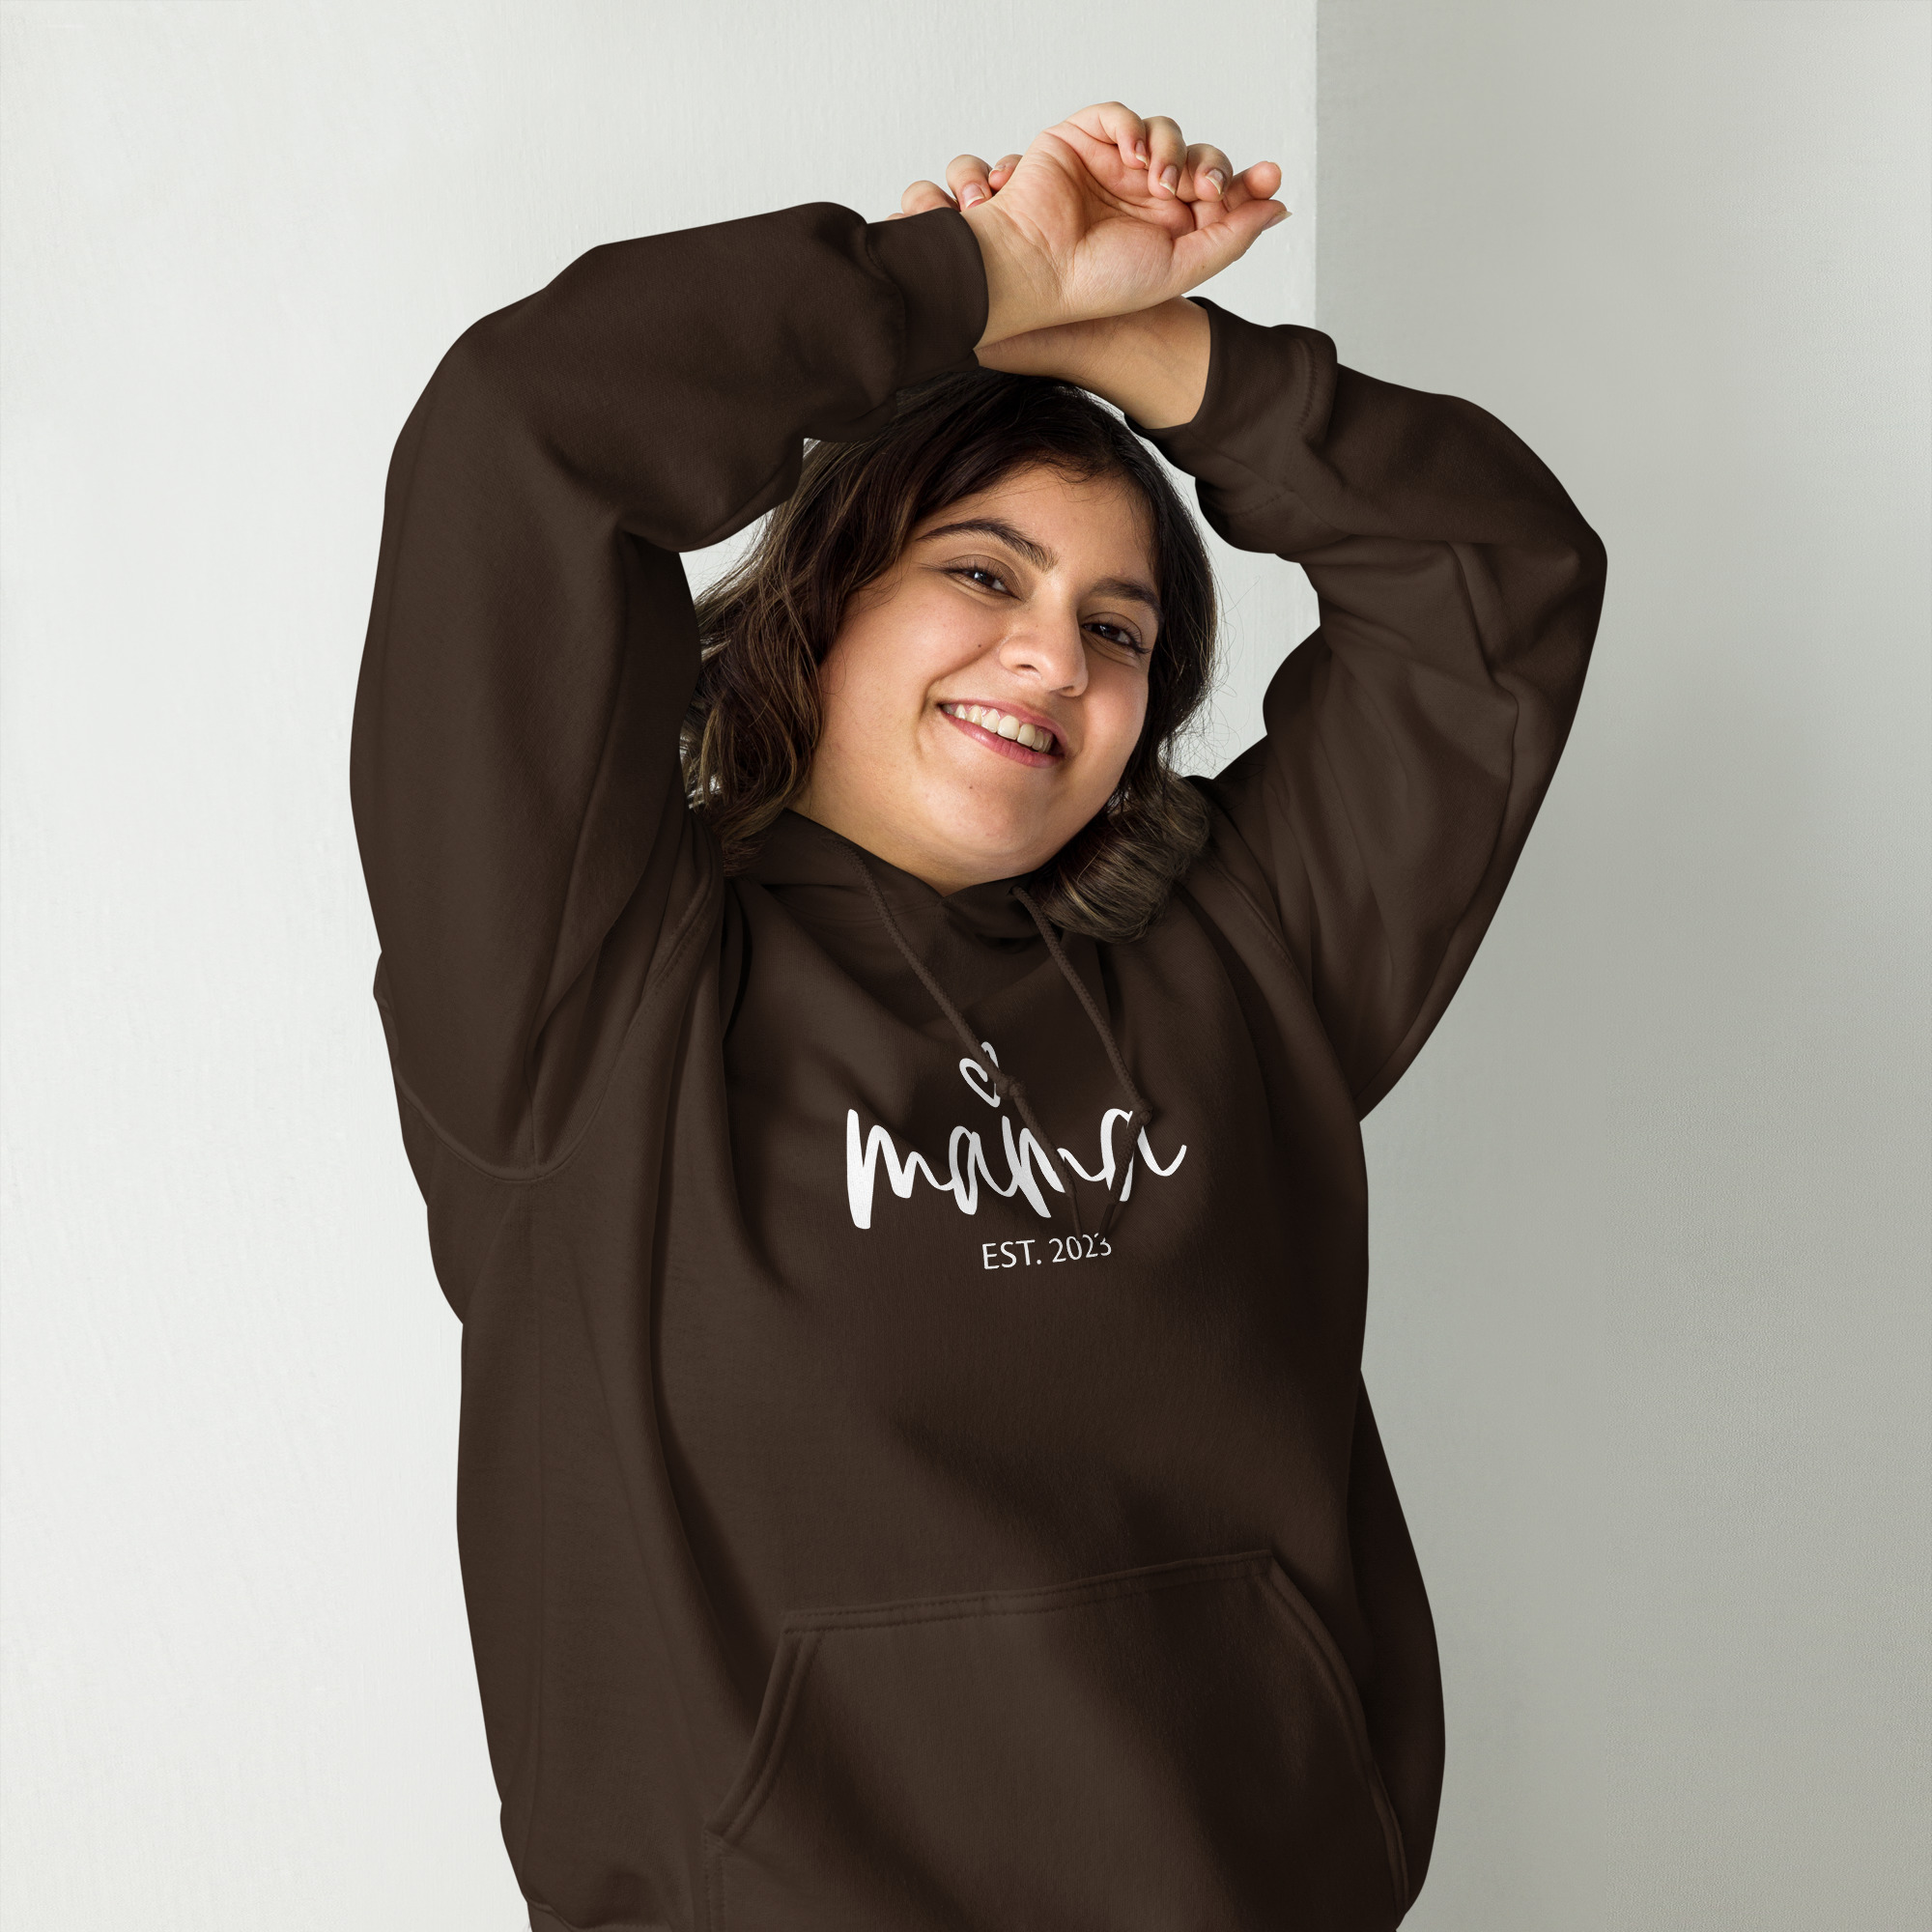 "mama heart established" personalized women’s hoodie